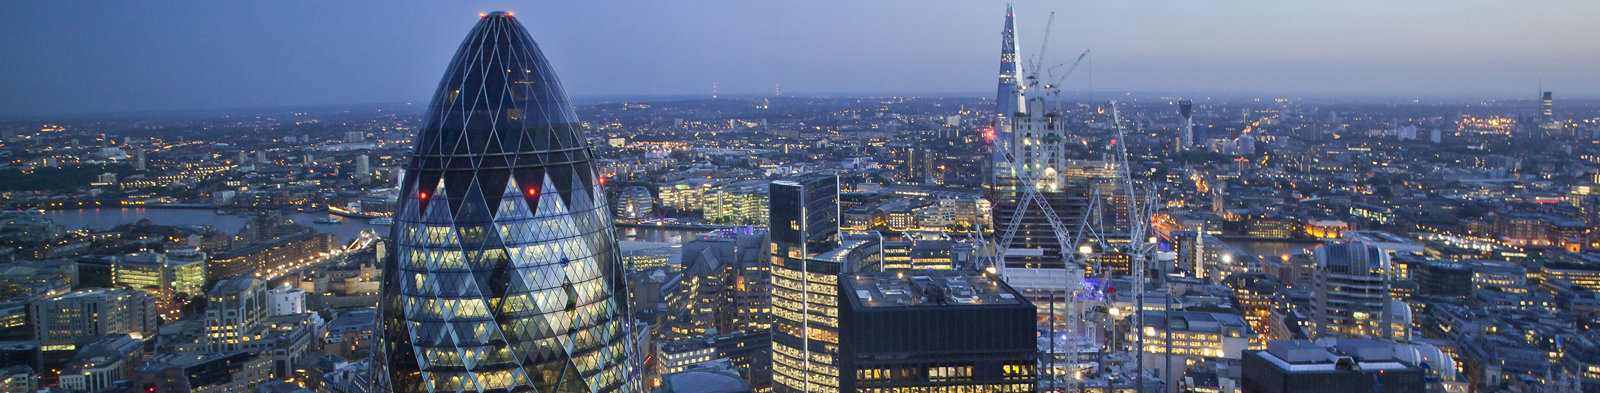 London's financial district skyline